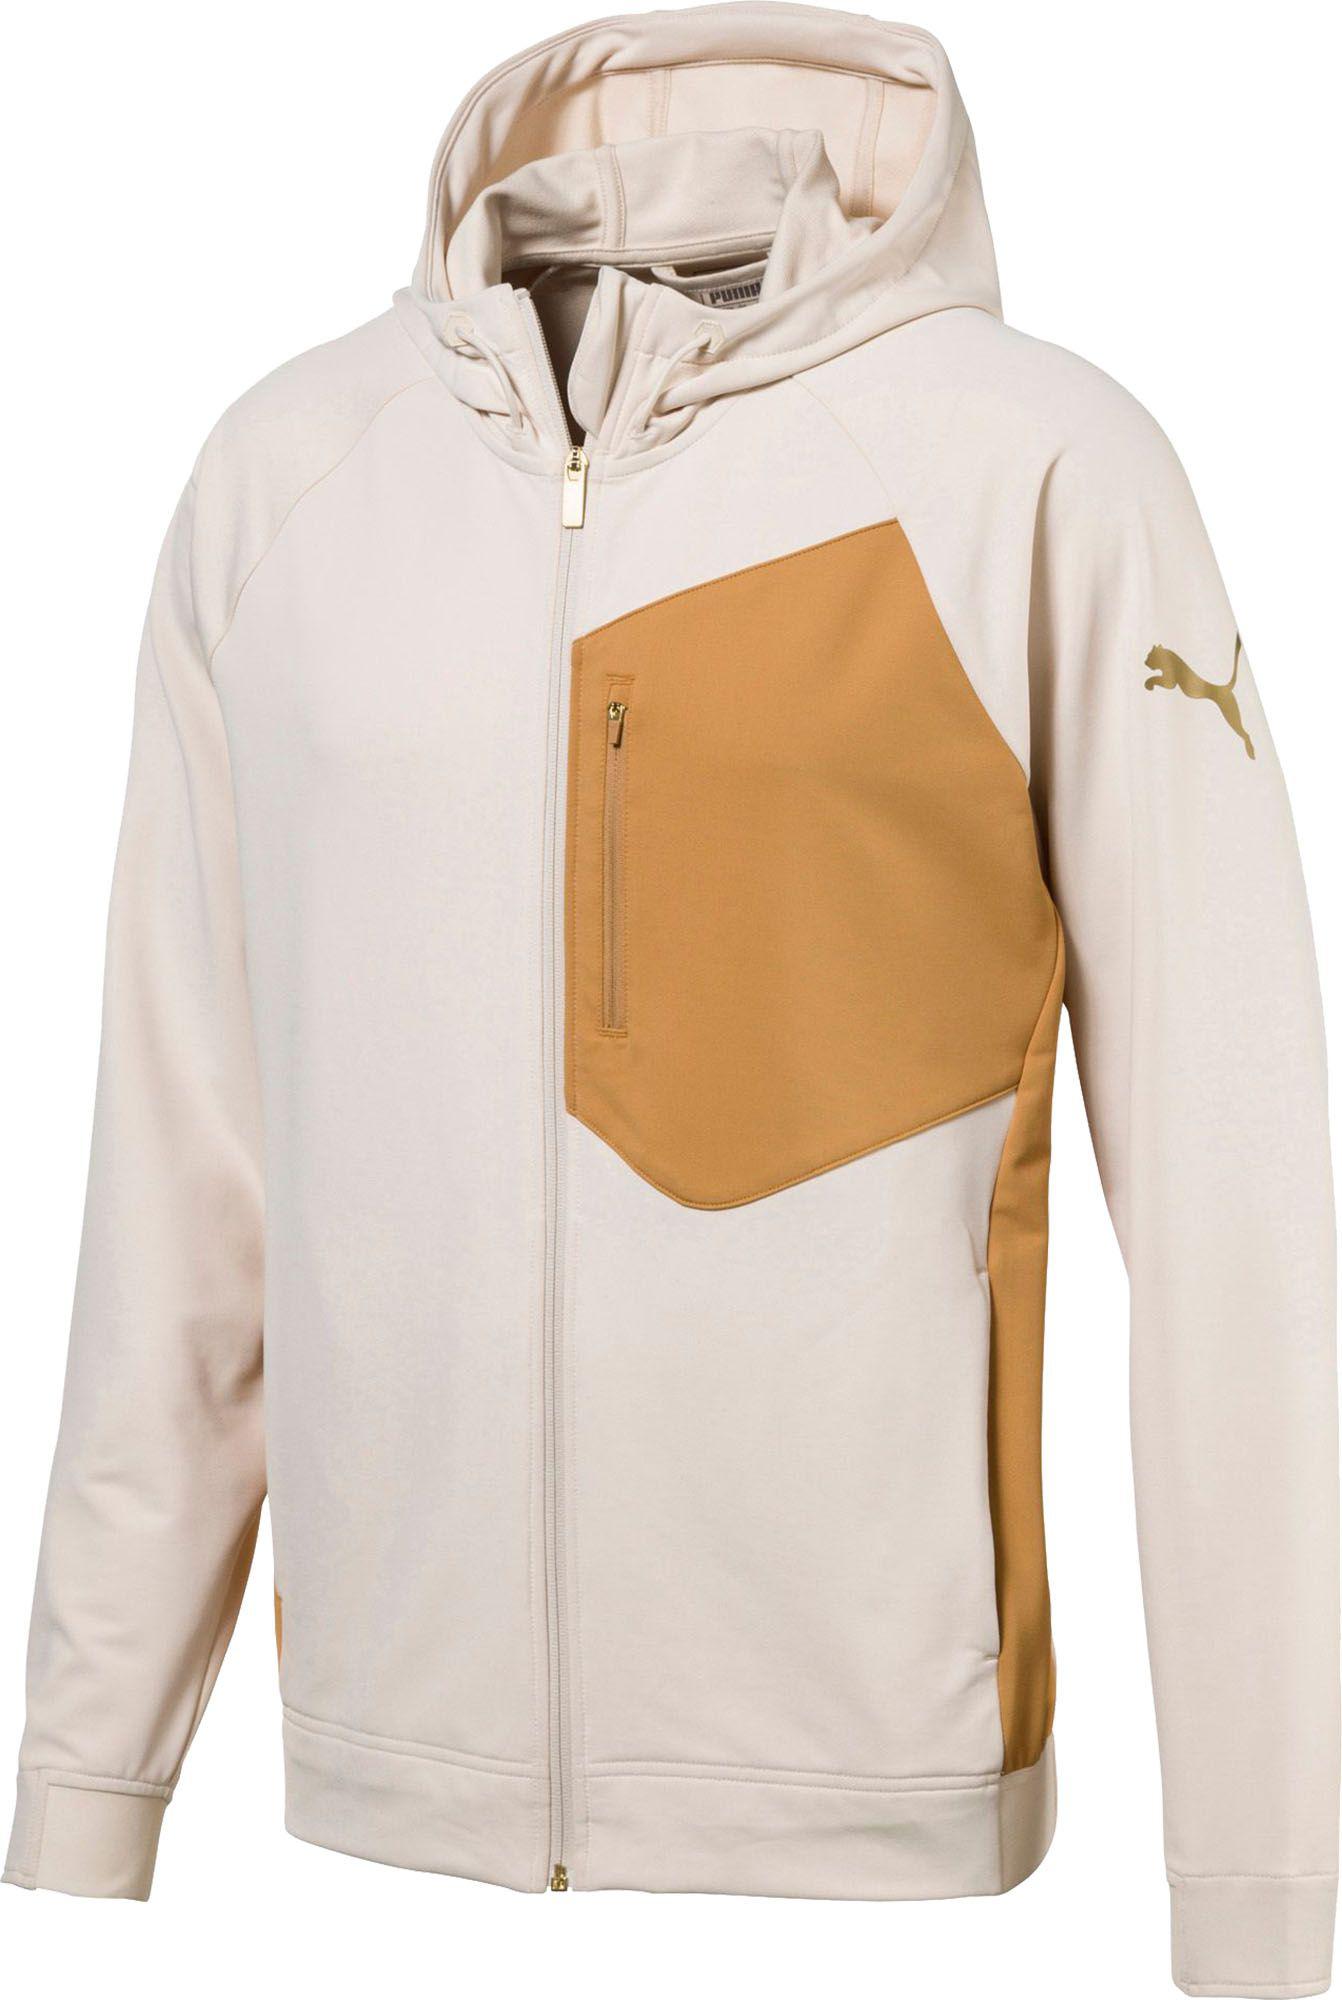 puma tech fleece hoodie